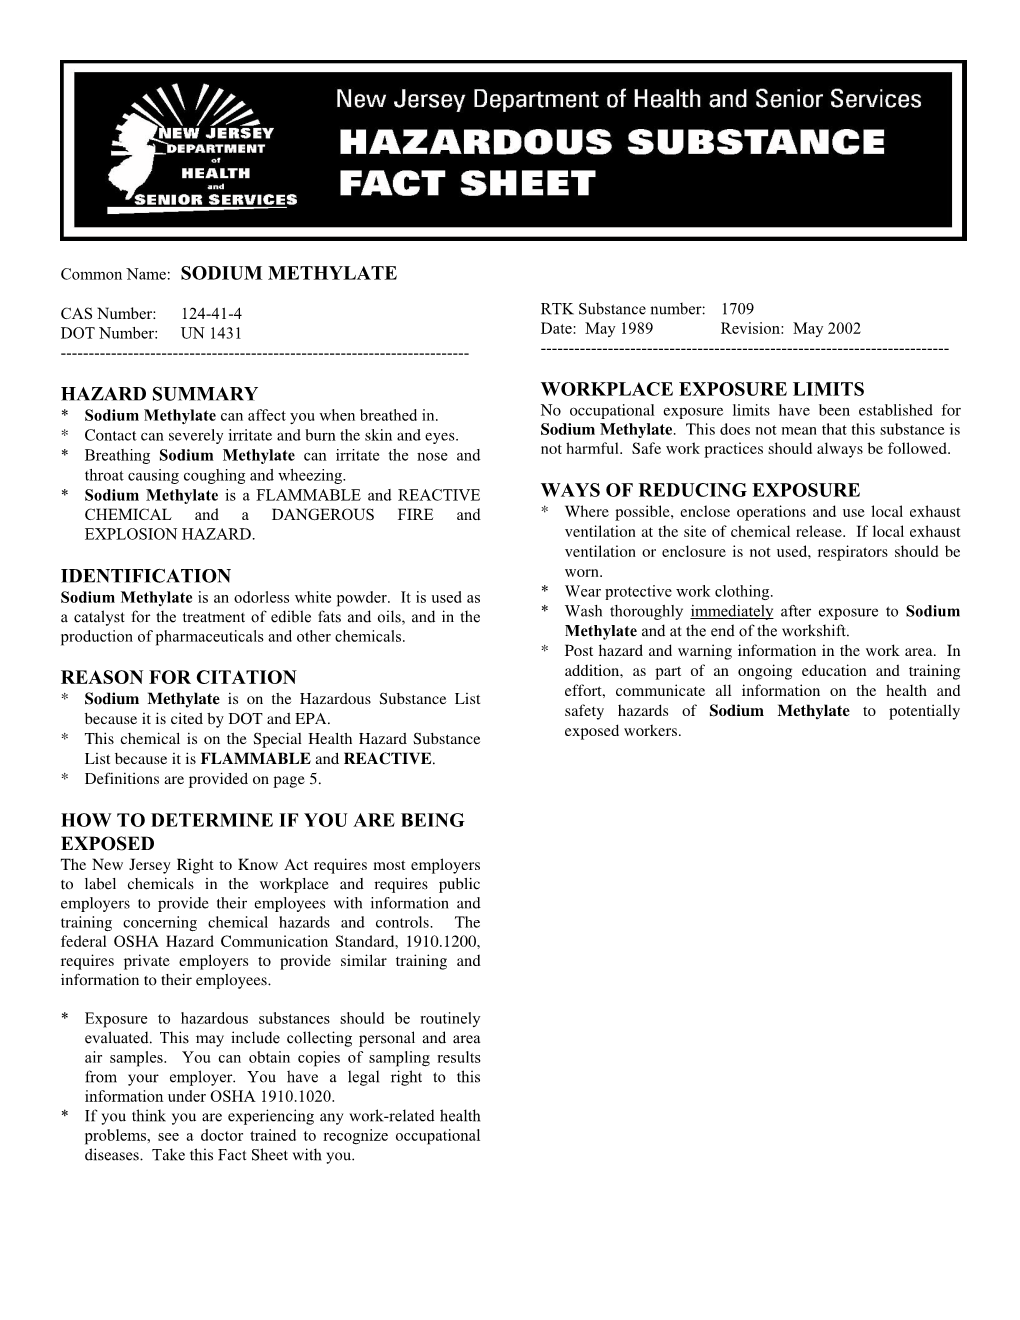 Sodium Methylate Hazard Summary Identification